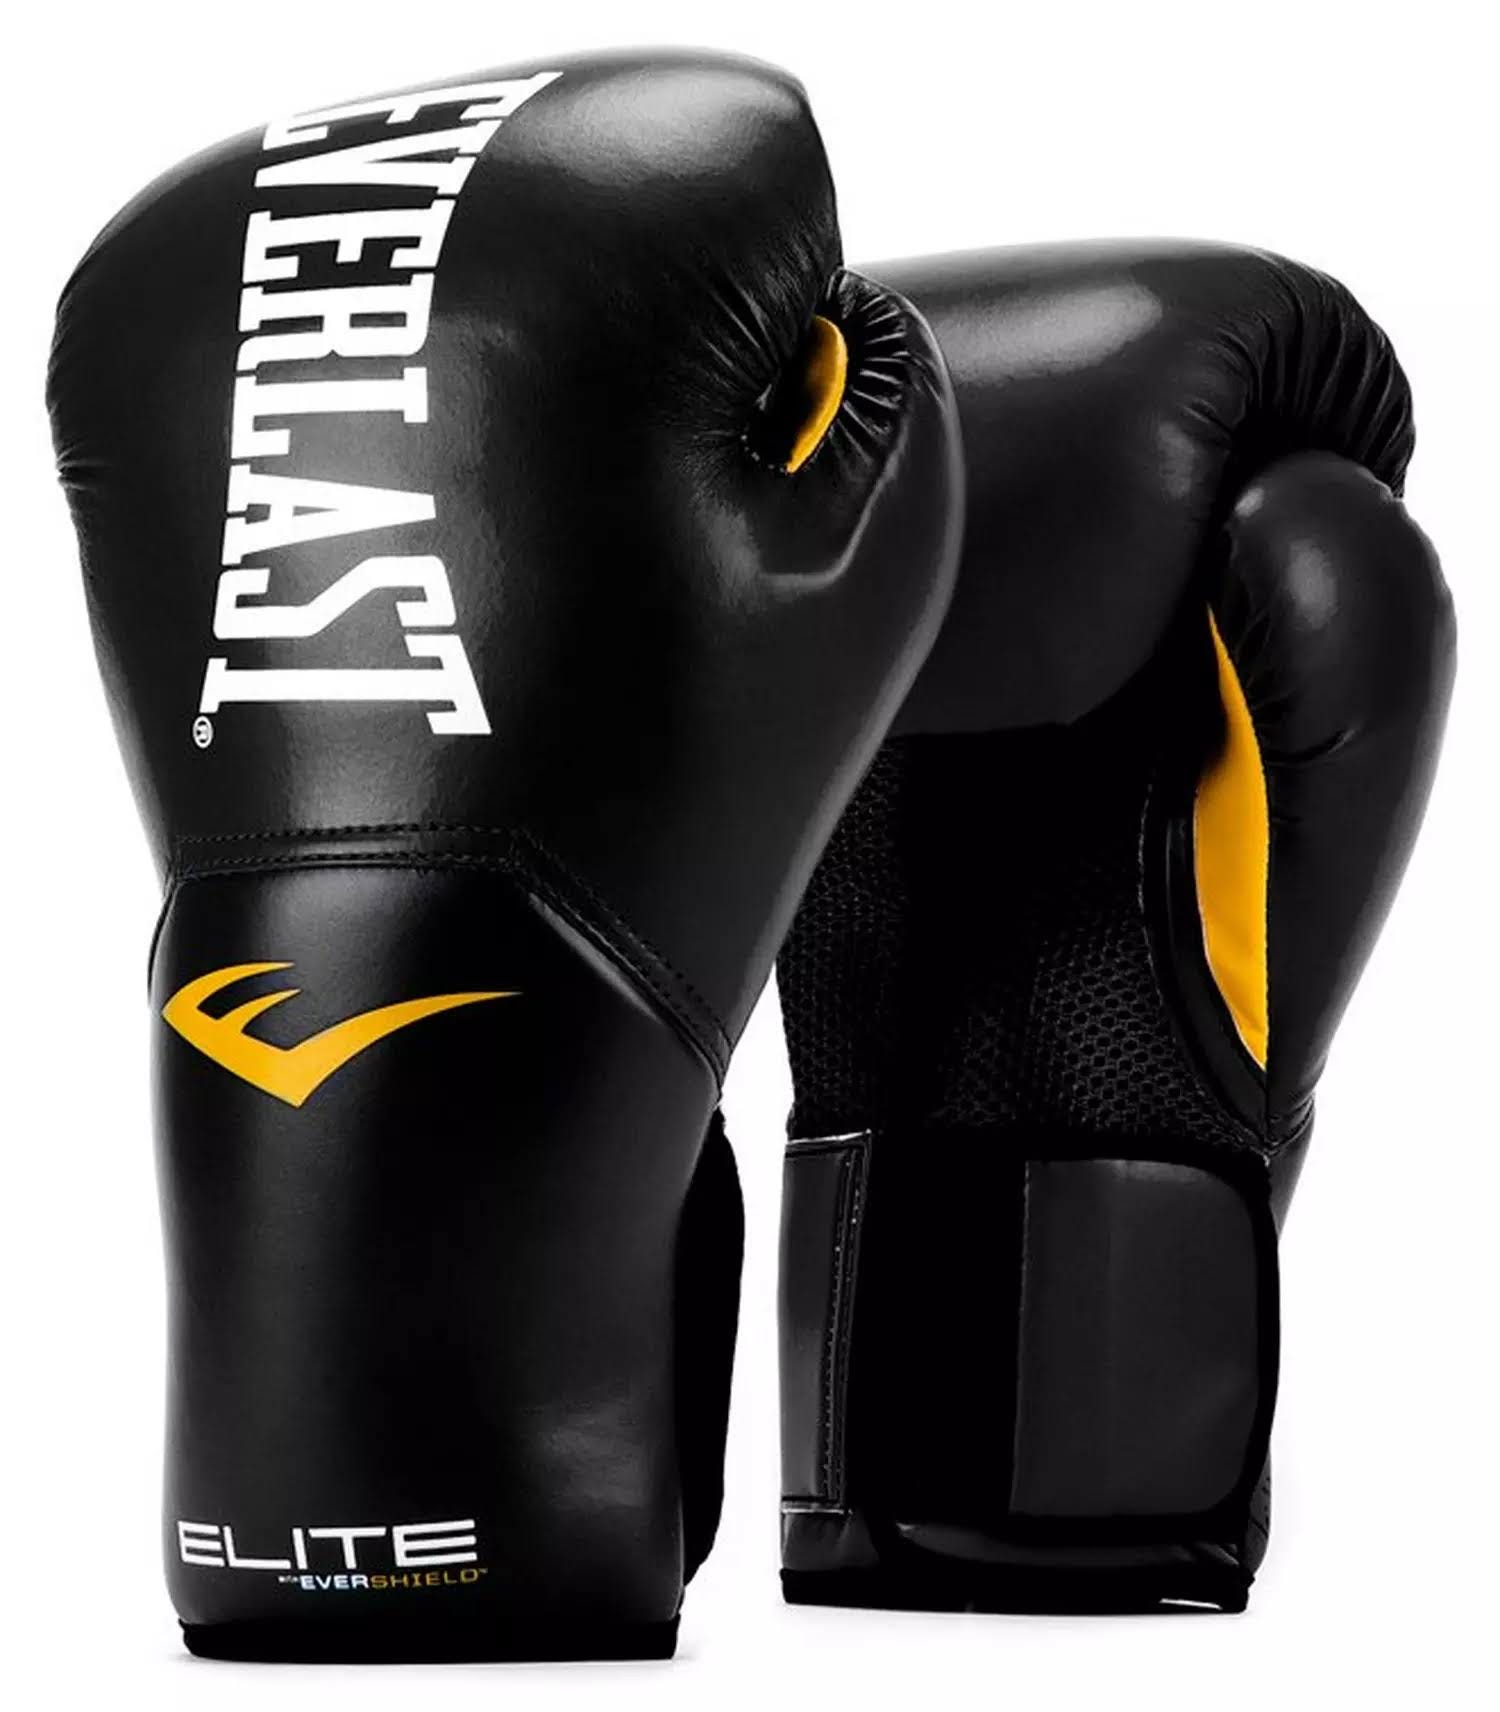 Everlast Elite Pro Boxing Gloves for Enhanced Training Experience | Image